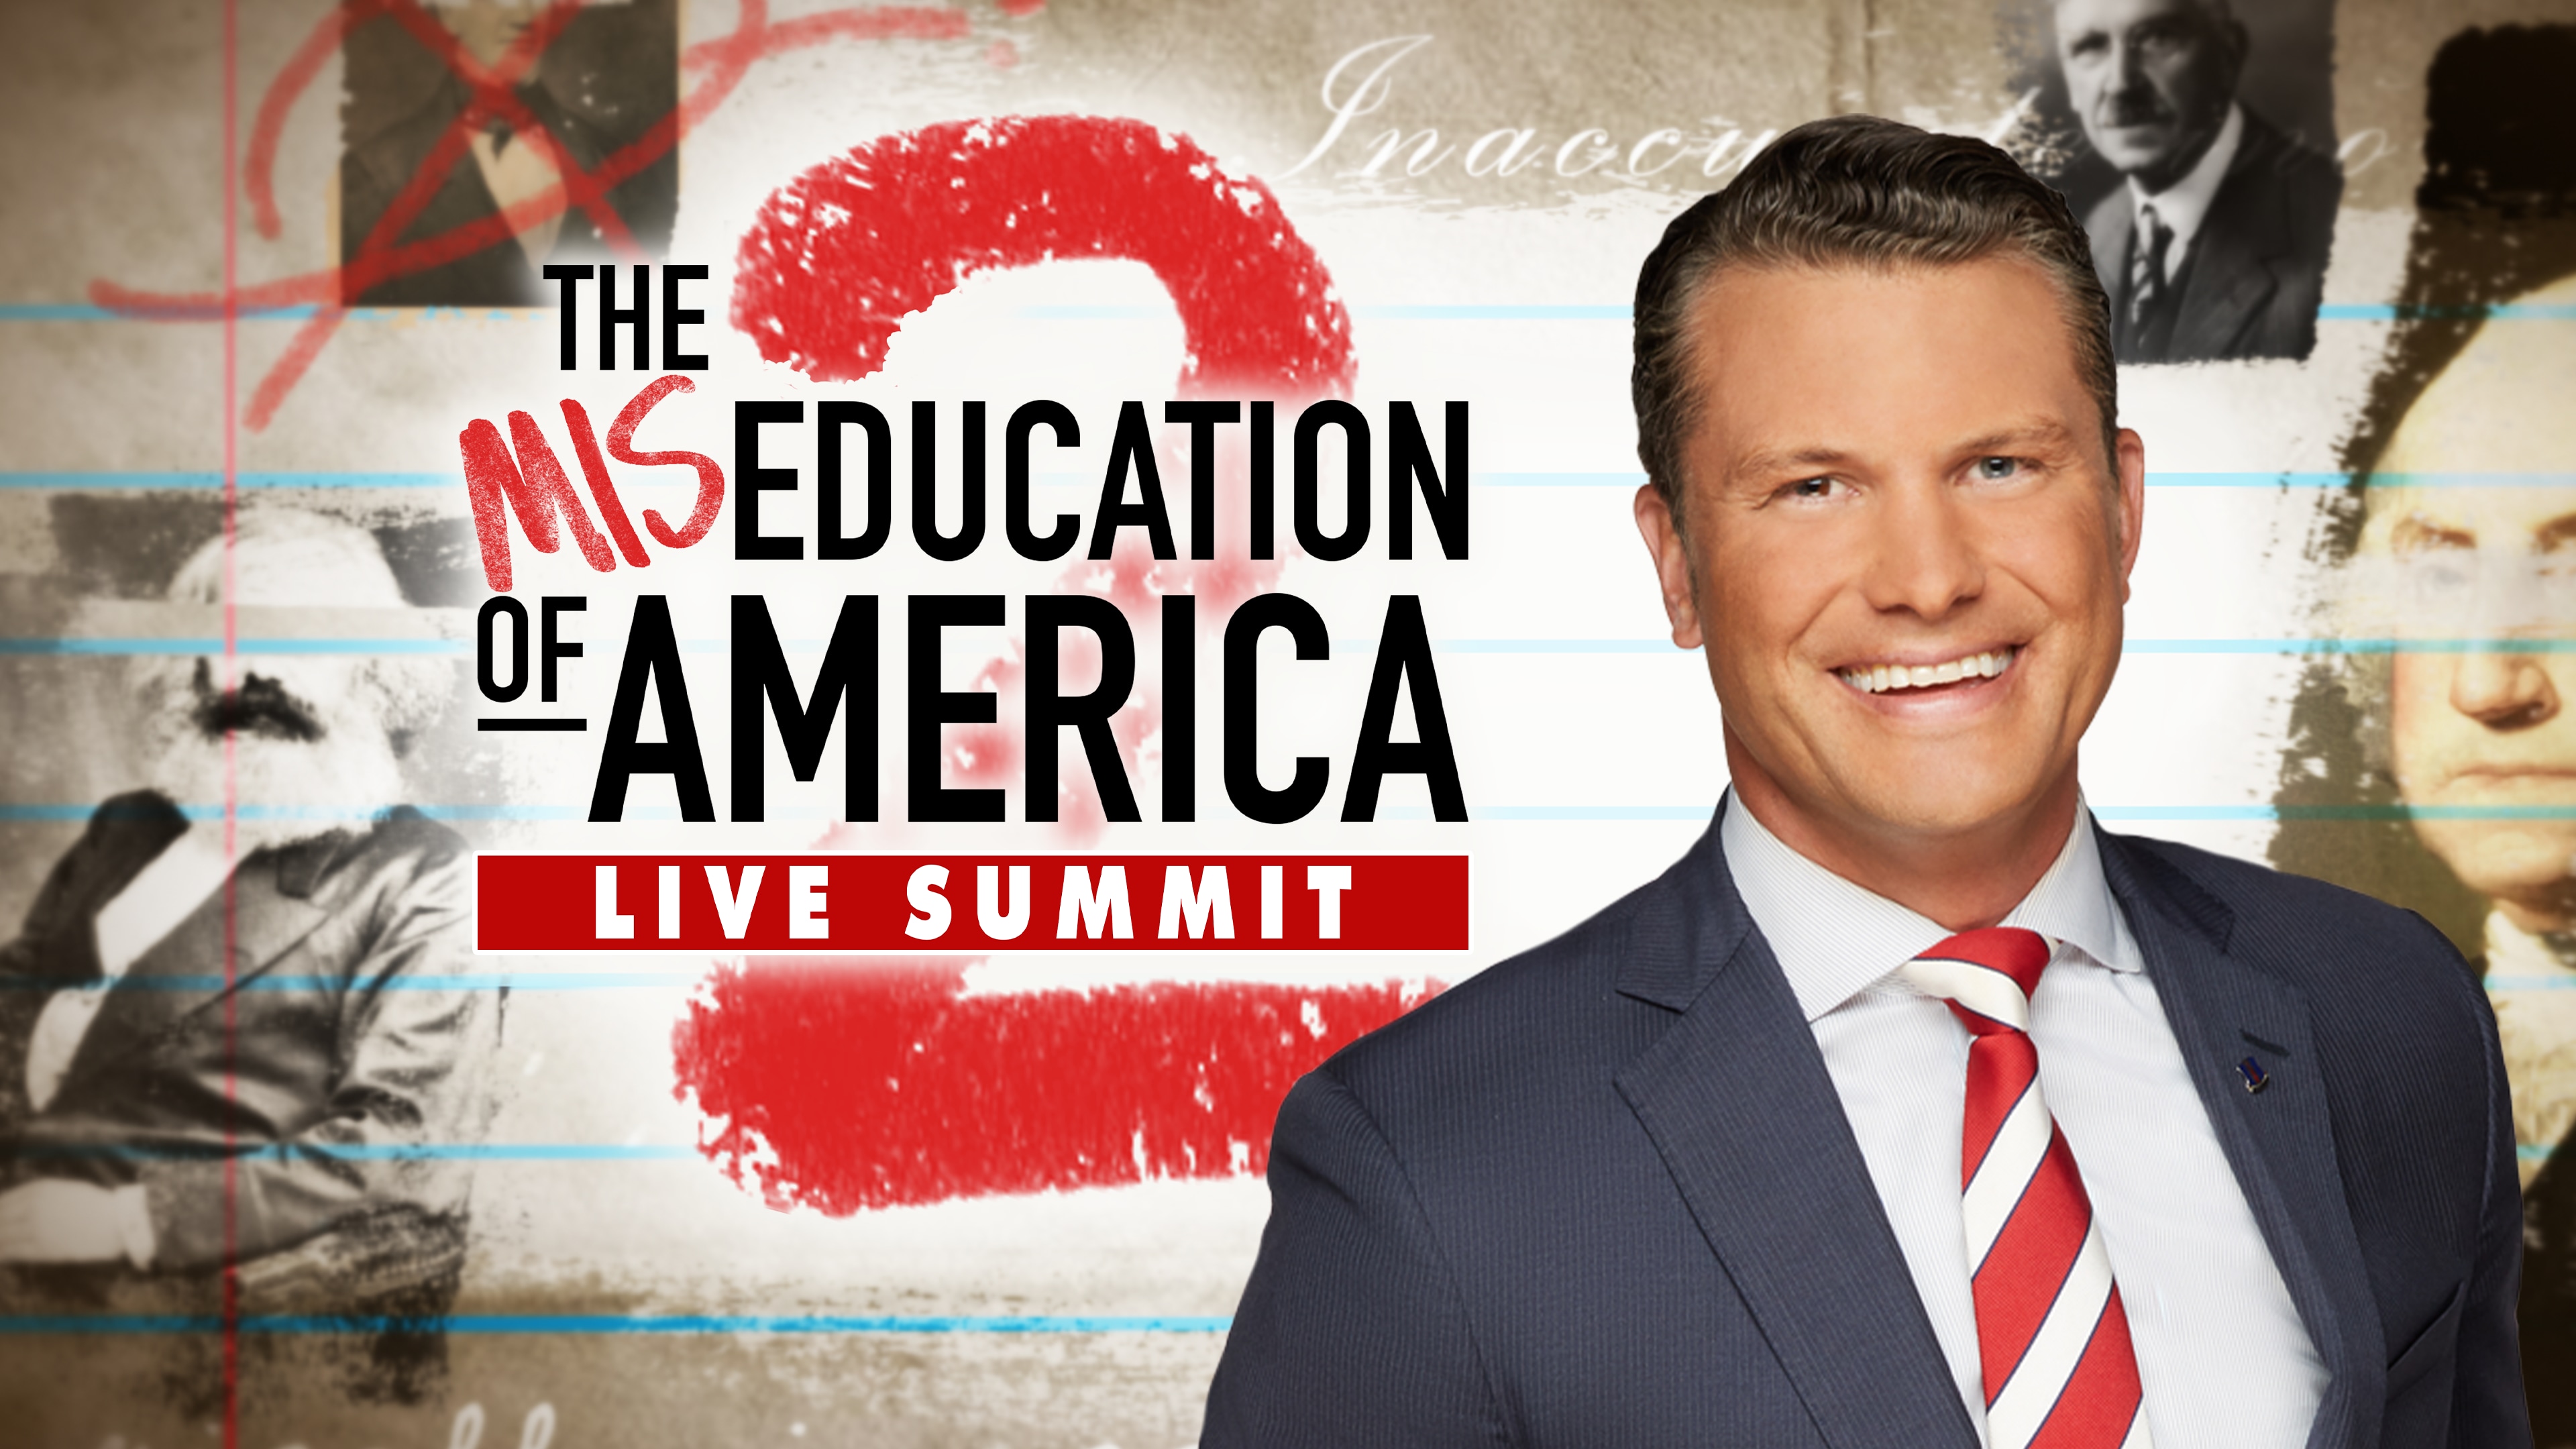 The MisEducation of America: Live Summit